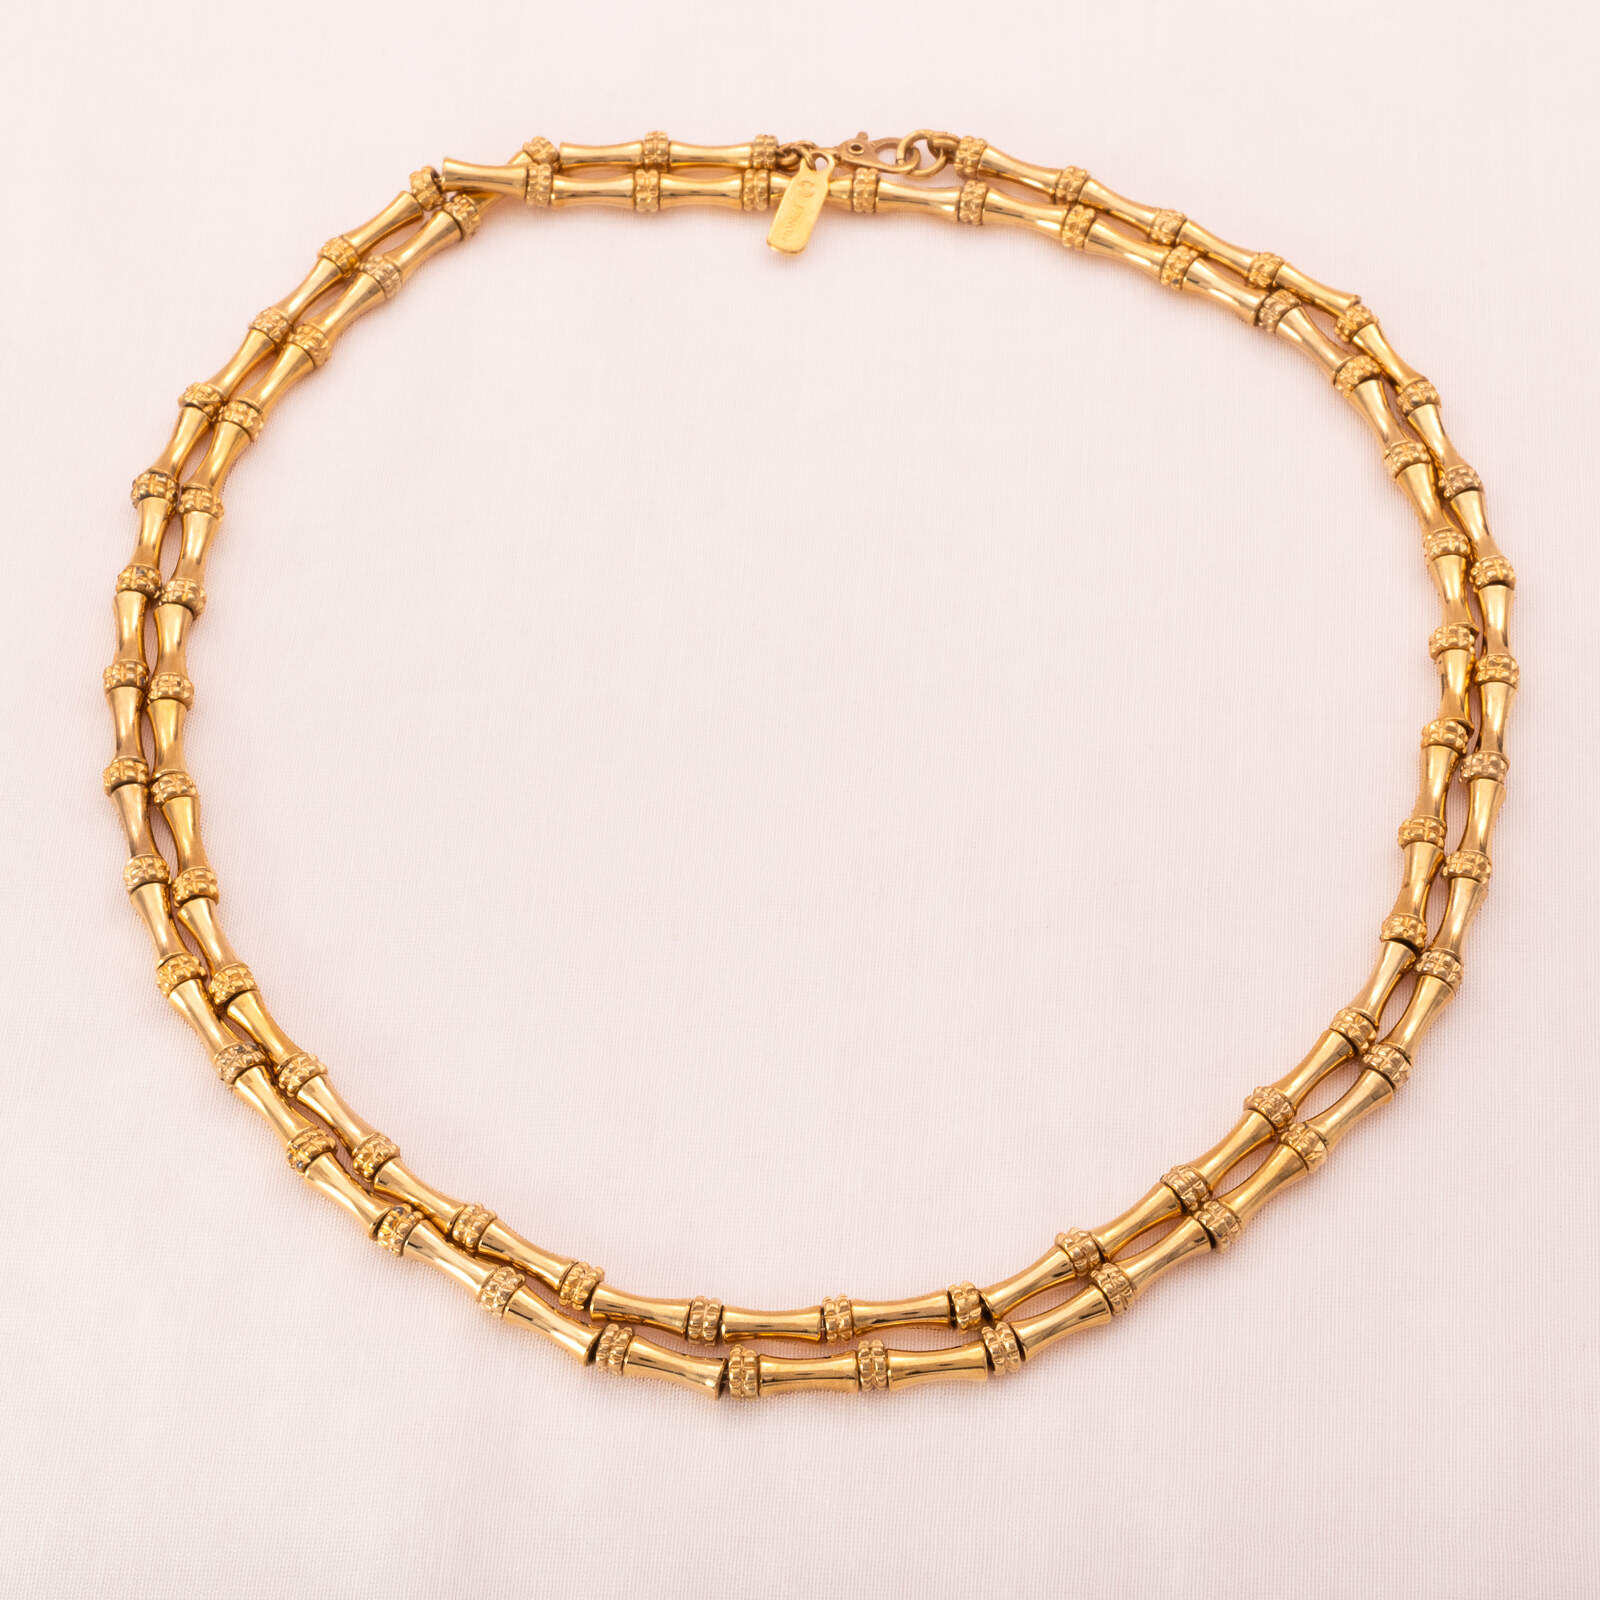 Monet-vergoldete-Halskette-lang-Kettenglieder-im-Bambus-Look